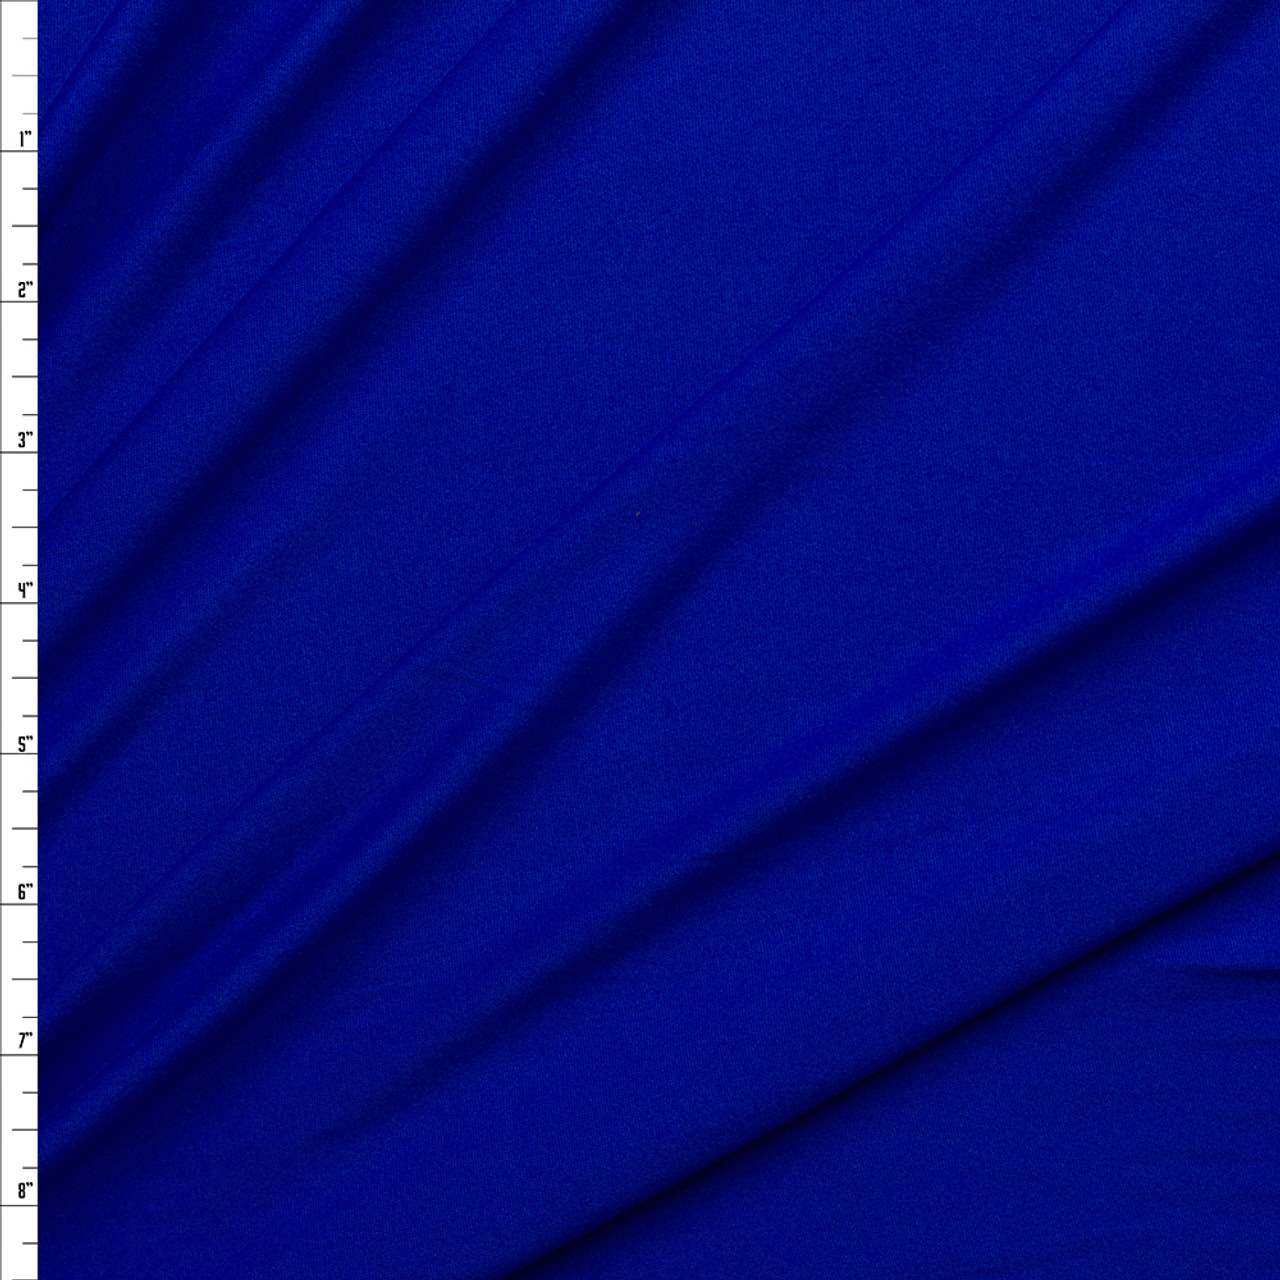 Royal Blue - Plain Nylon/Spandex All-Way Stretch Fabric Material - 150cm  (59) wide per metre / half